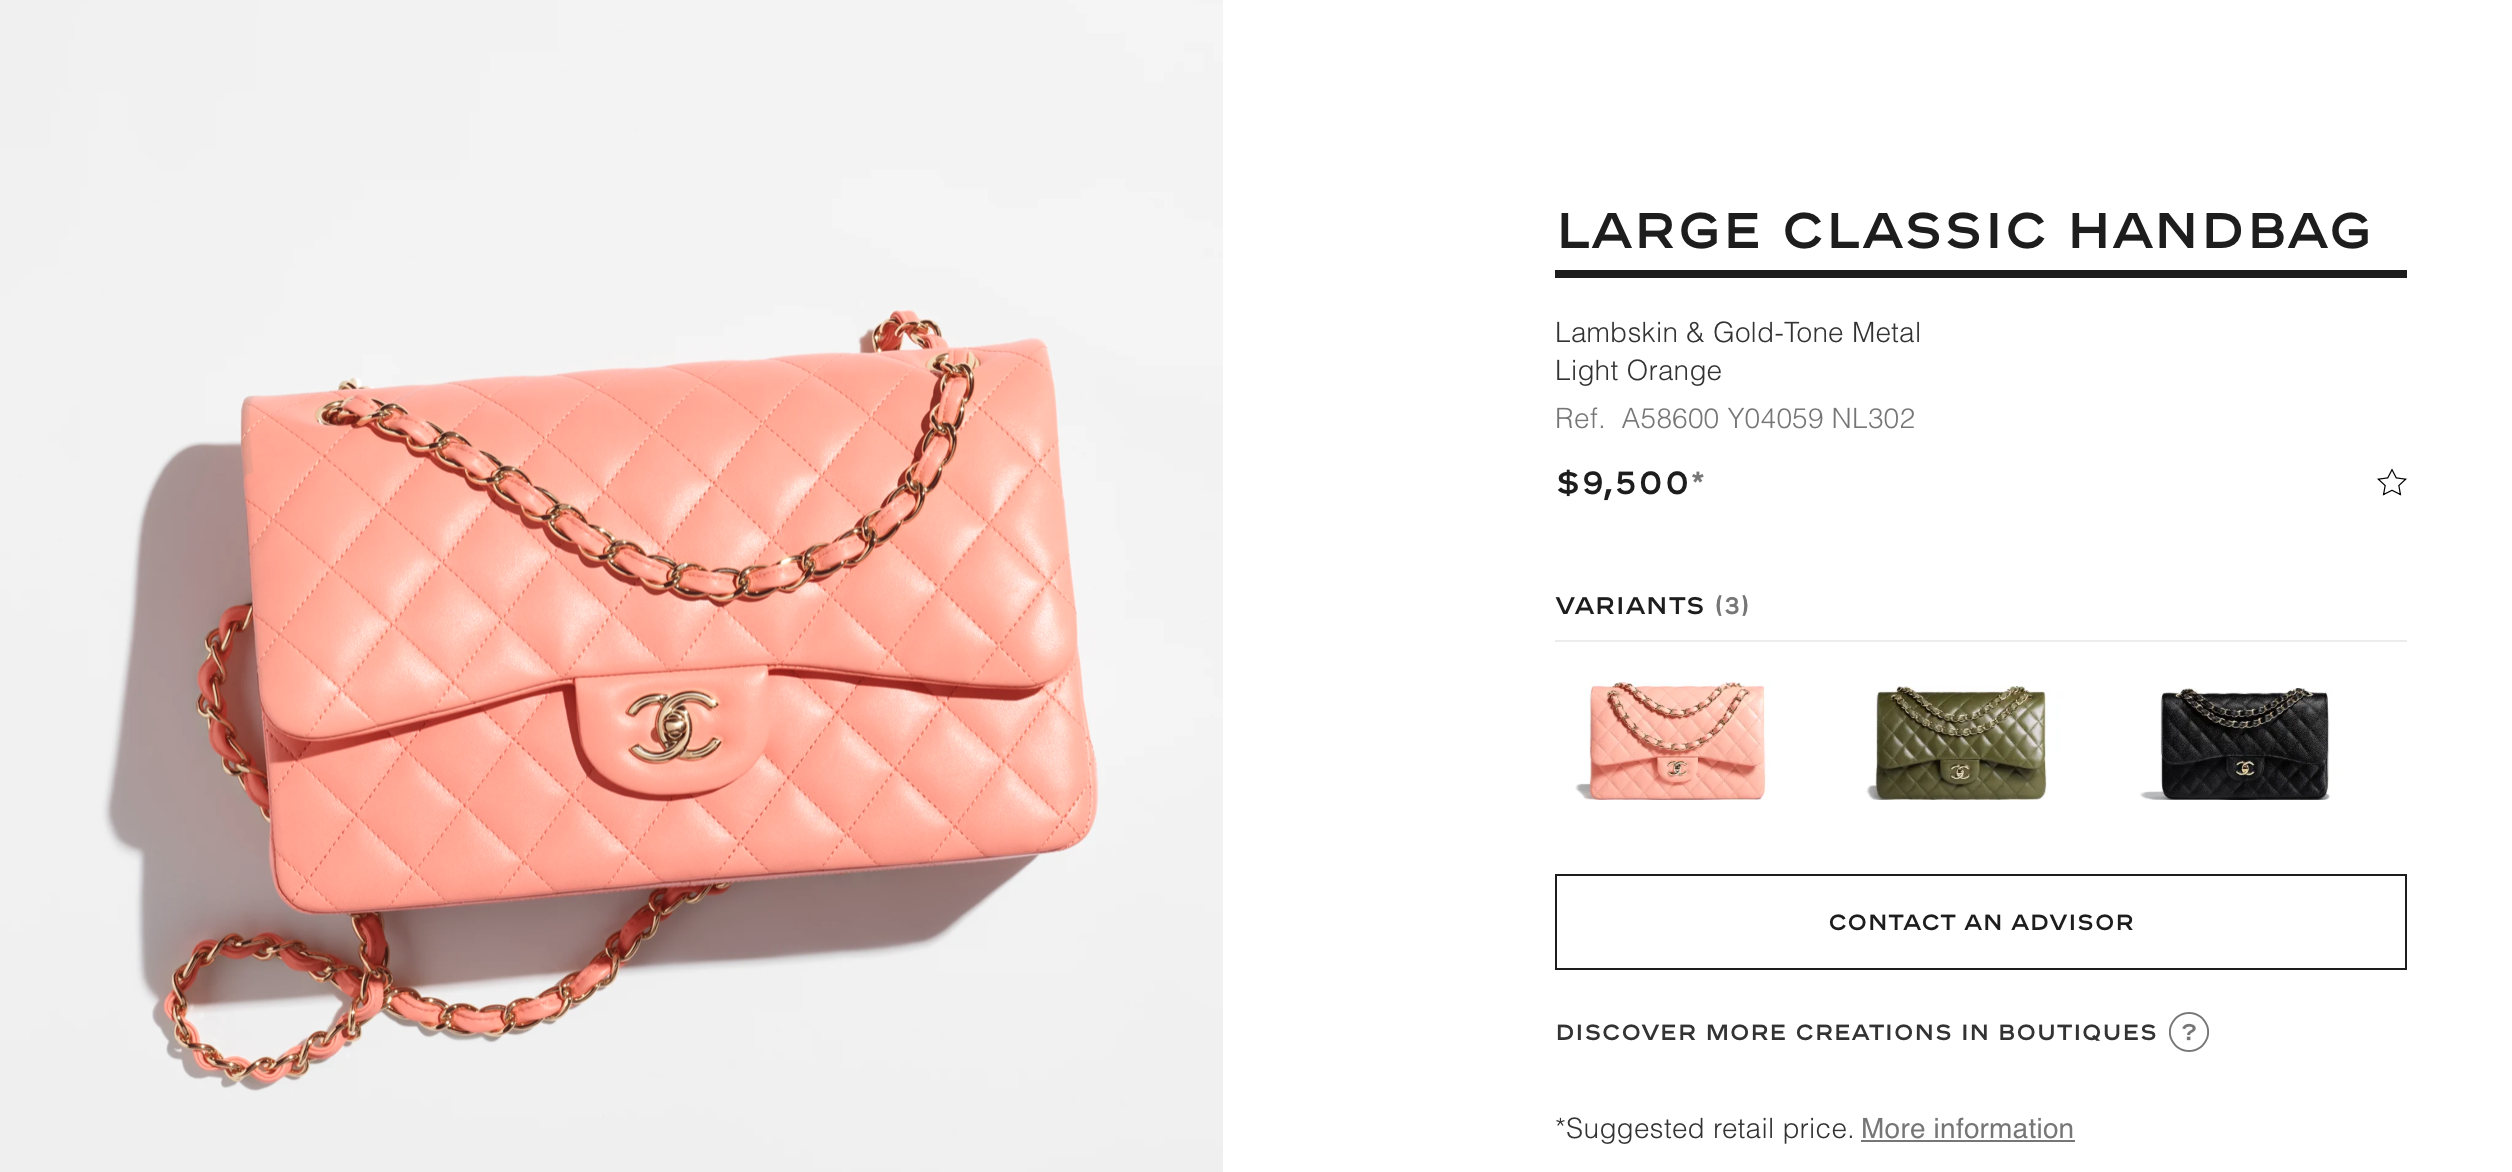 Chanel Price Increase 2022 - Handbagholic